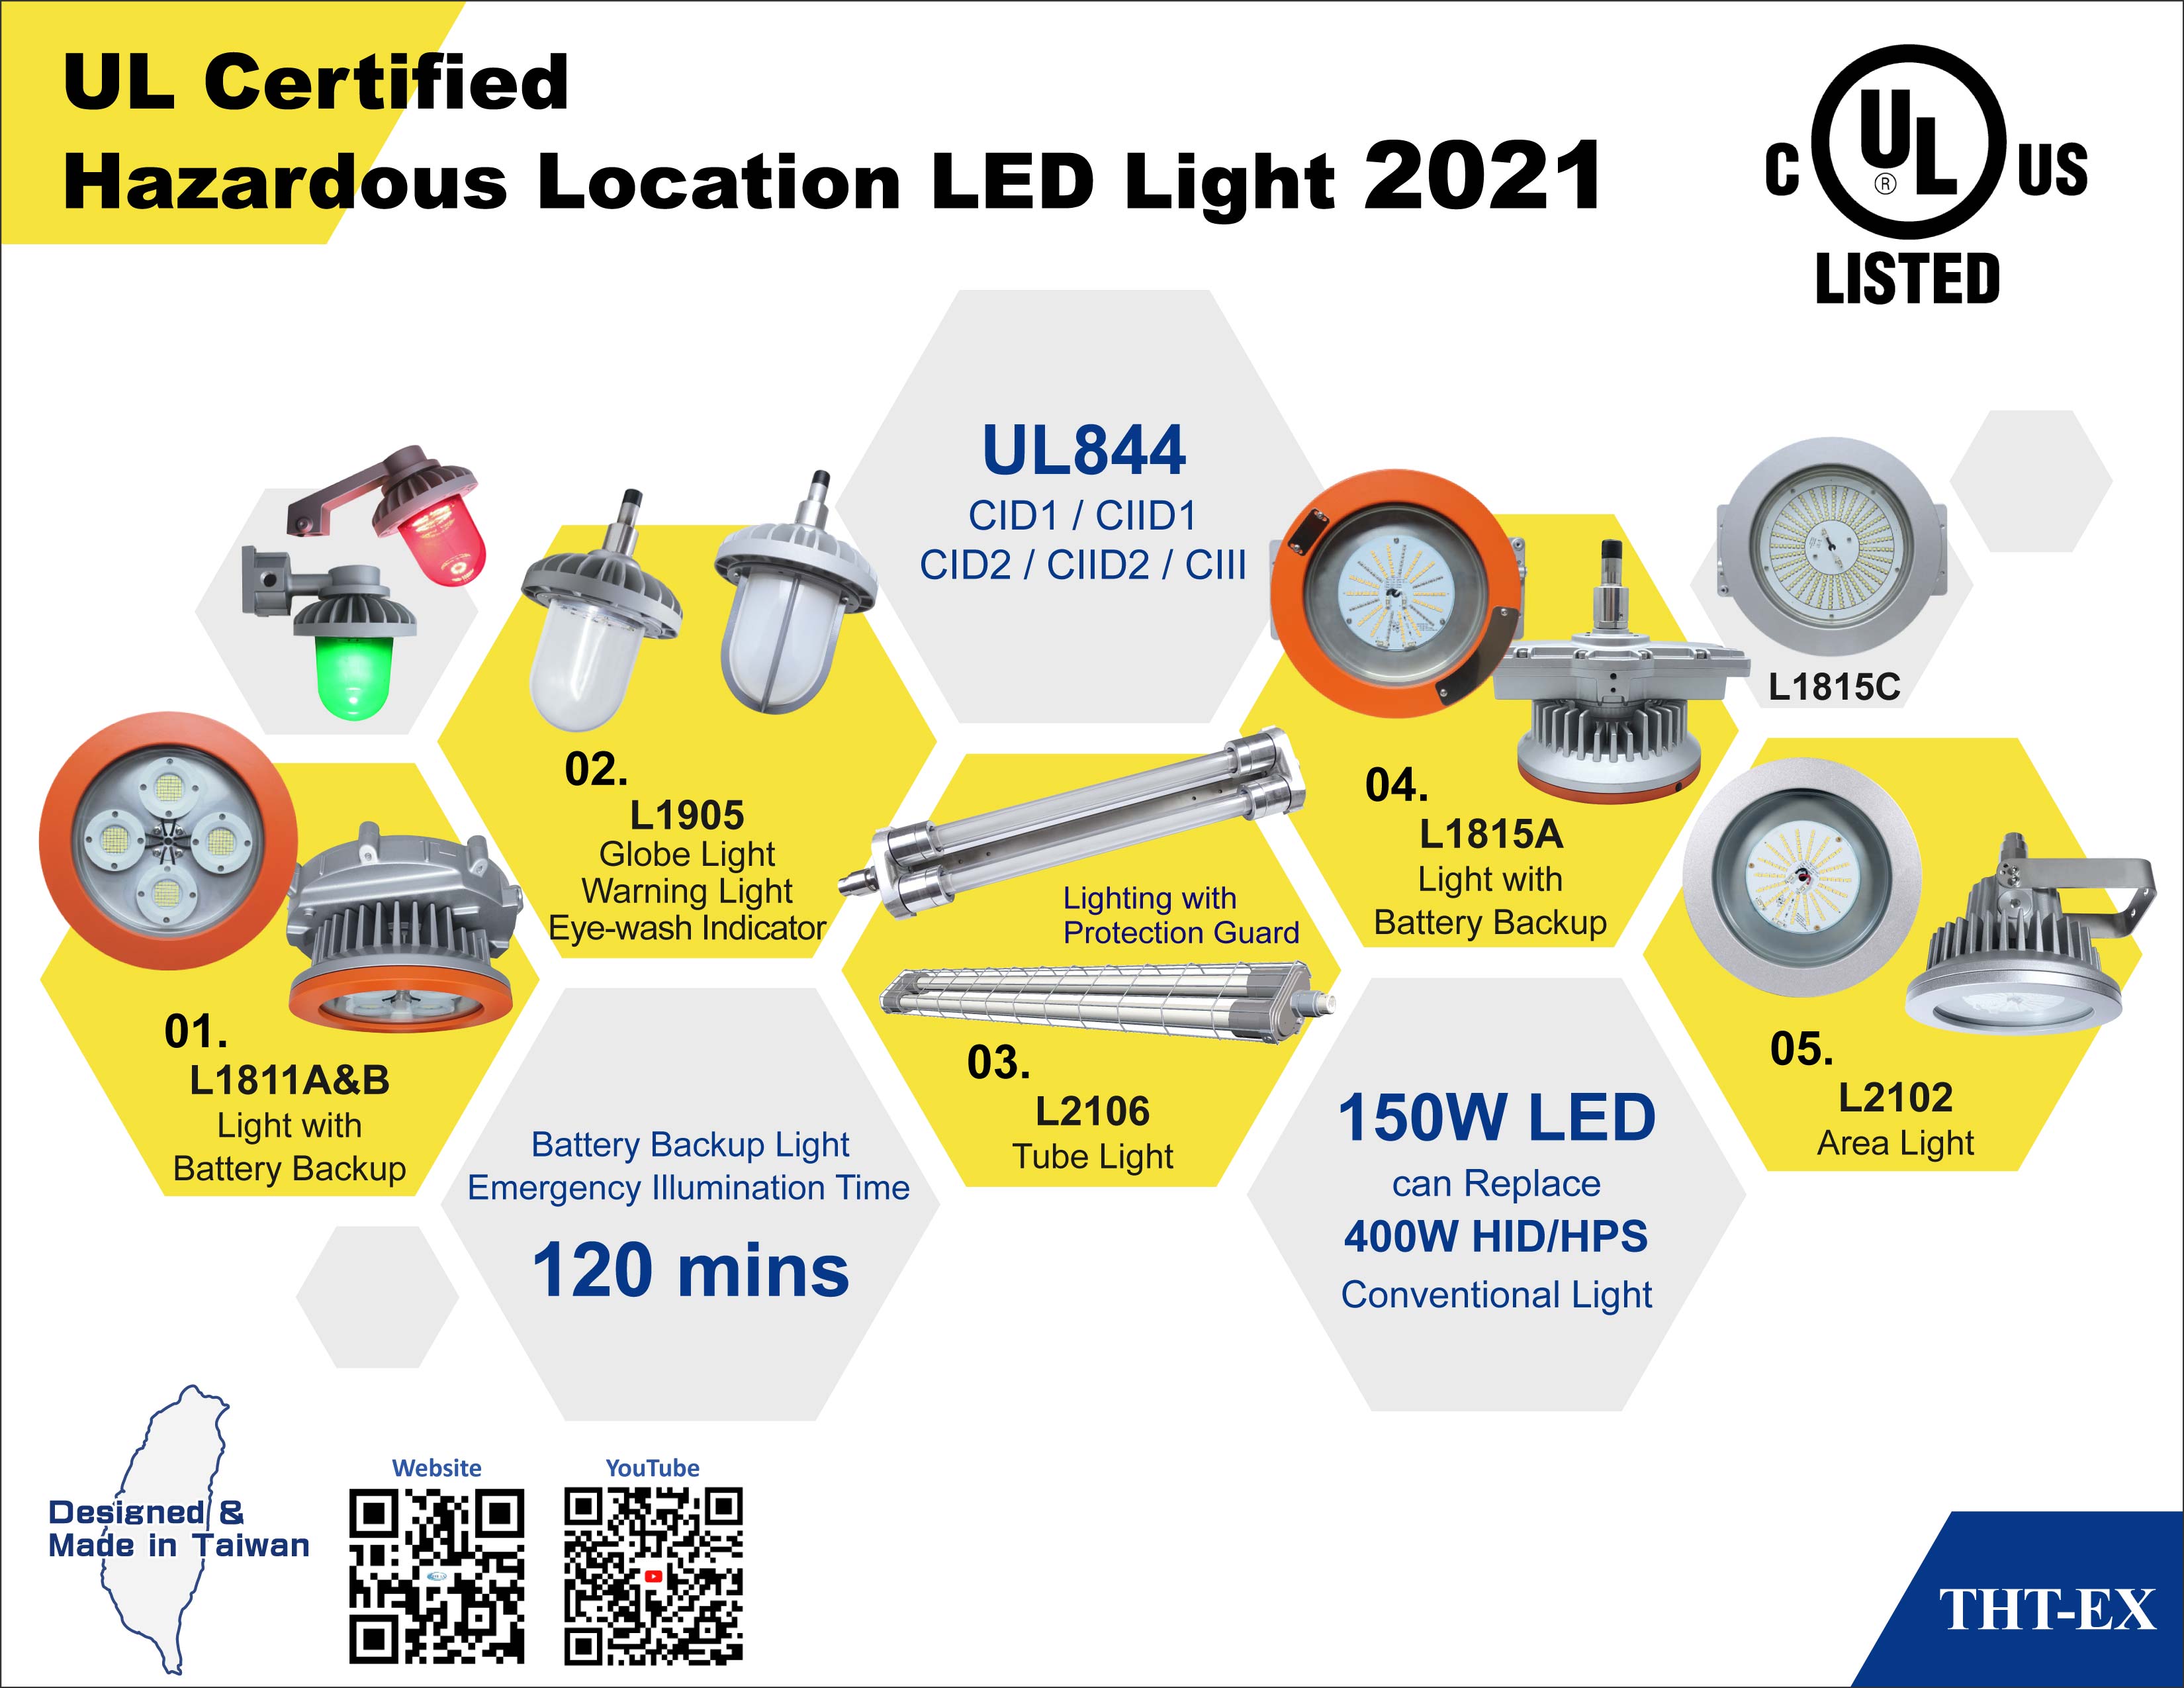  2021 North American UL Listed Hazardous Location Lighting